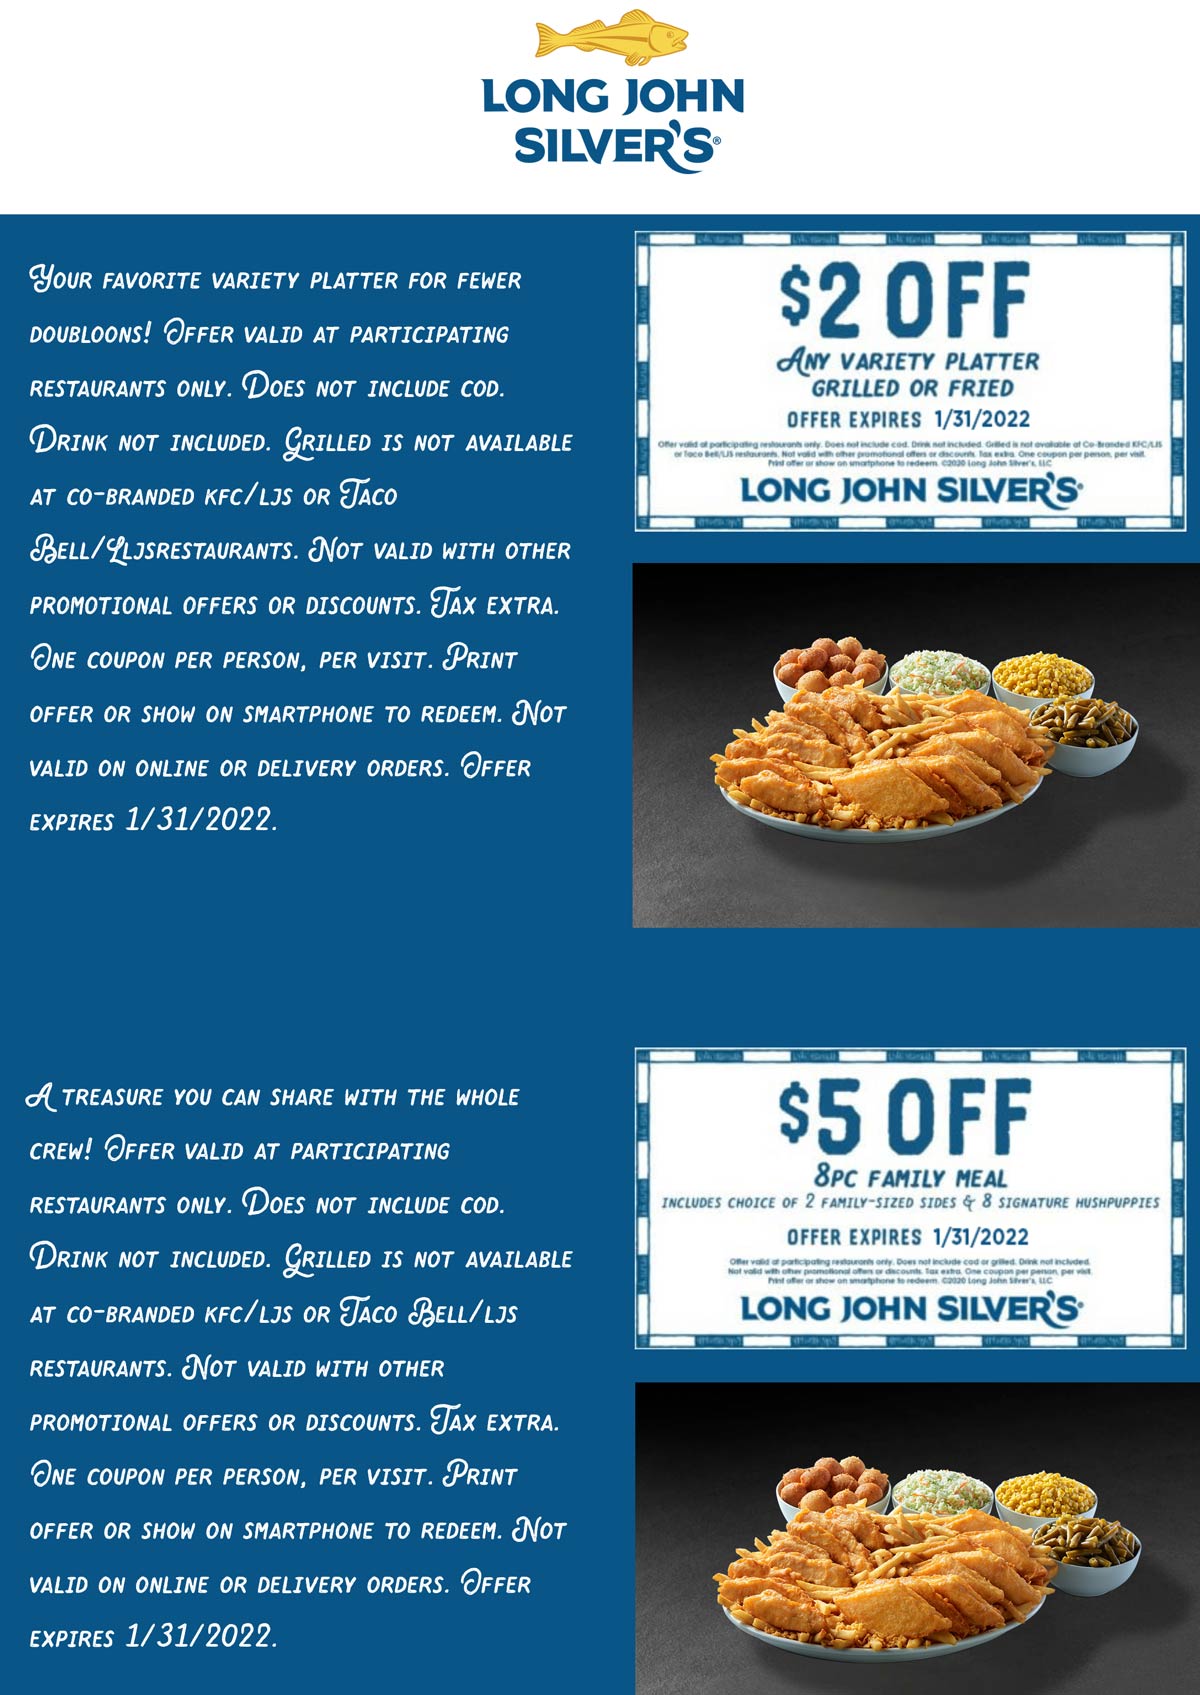 Long John Silvers restaurants Coupon  $2 off a platter & $5 off family meal at Long John Silvers #longjohnsilvers 